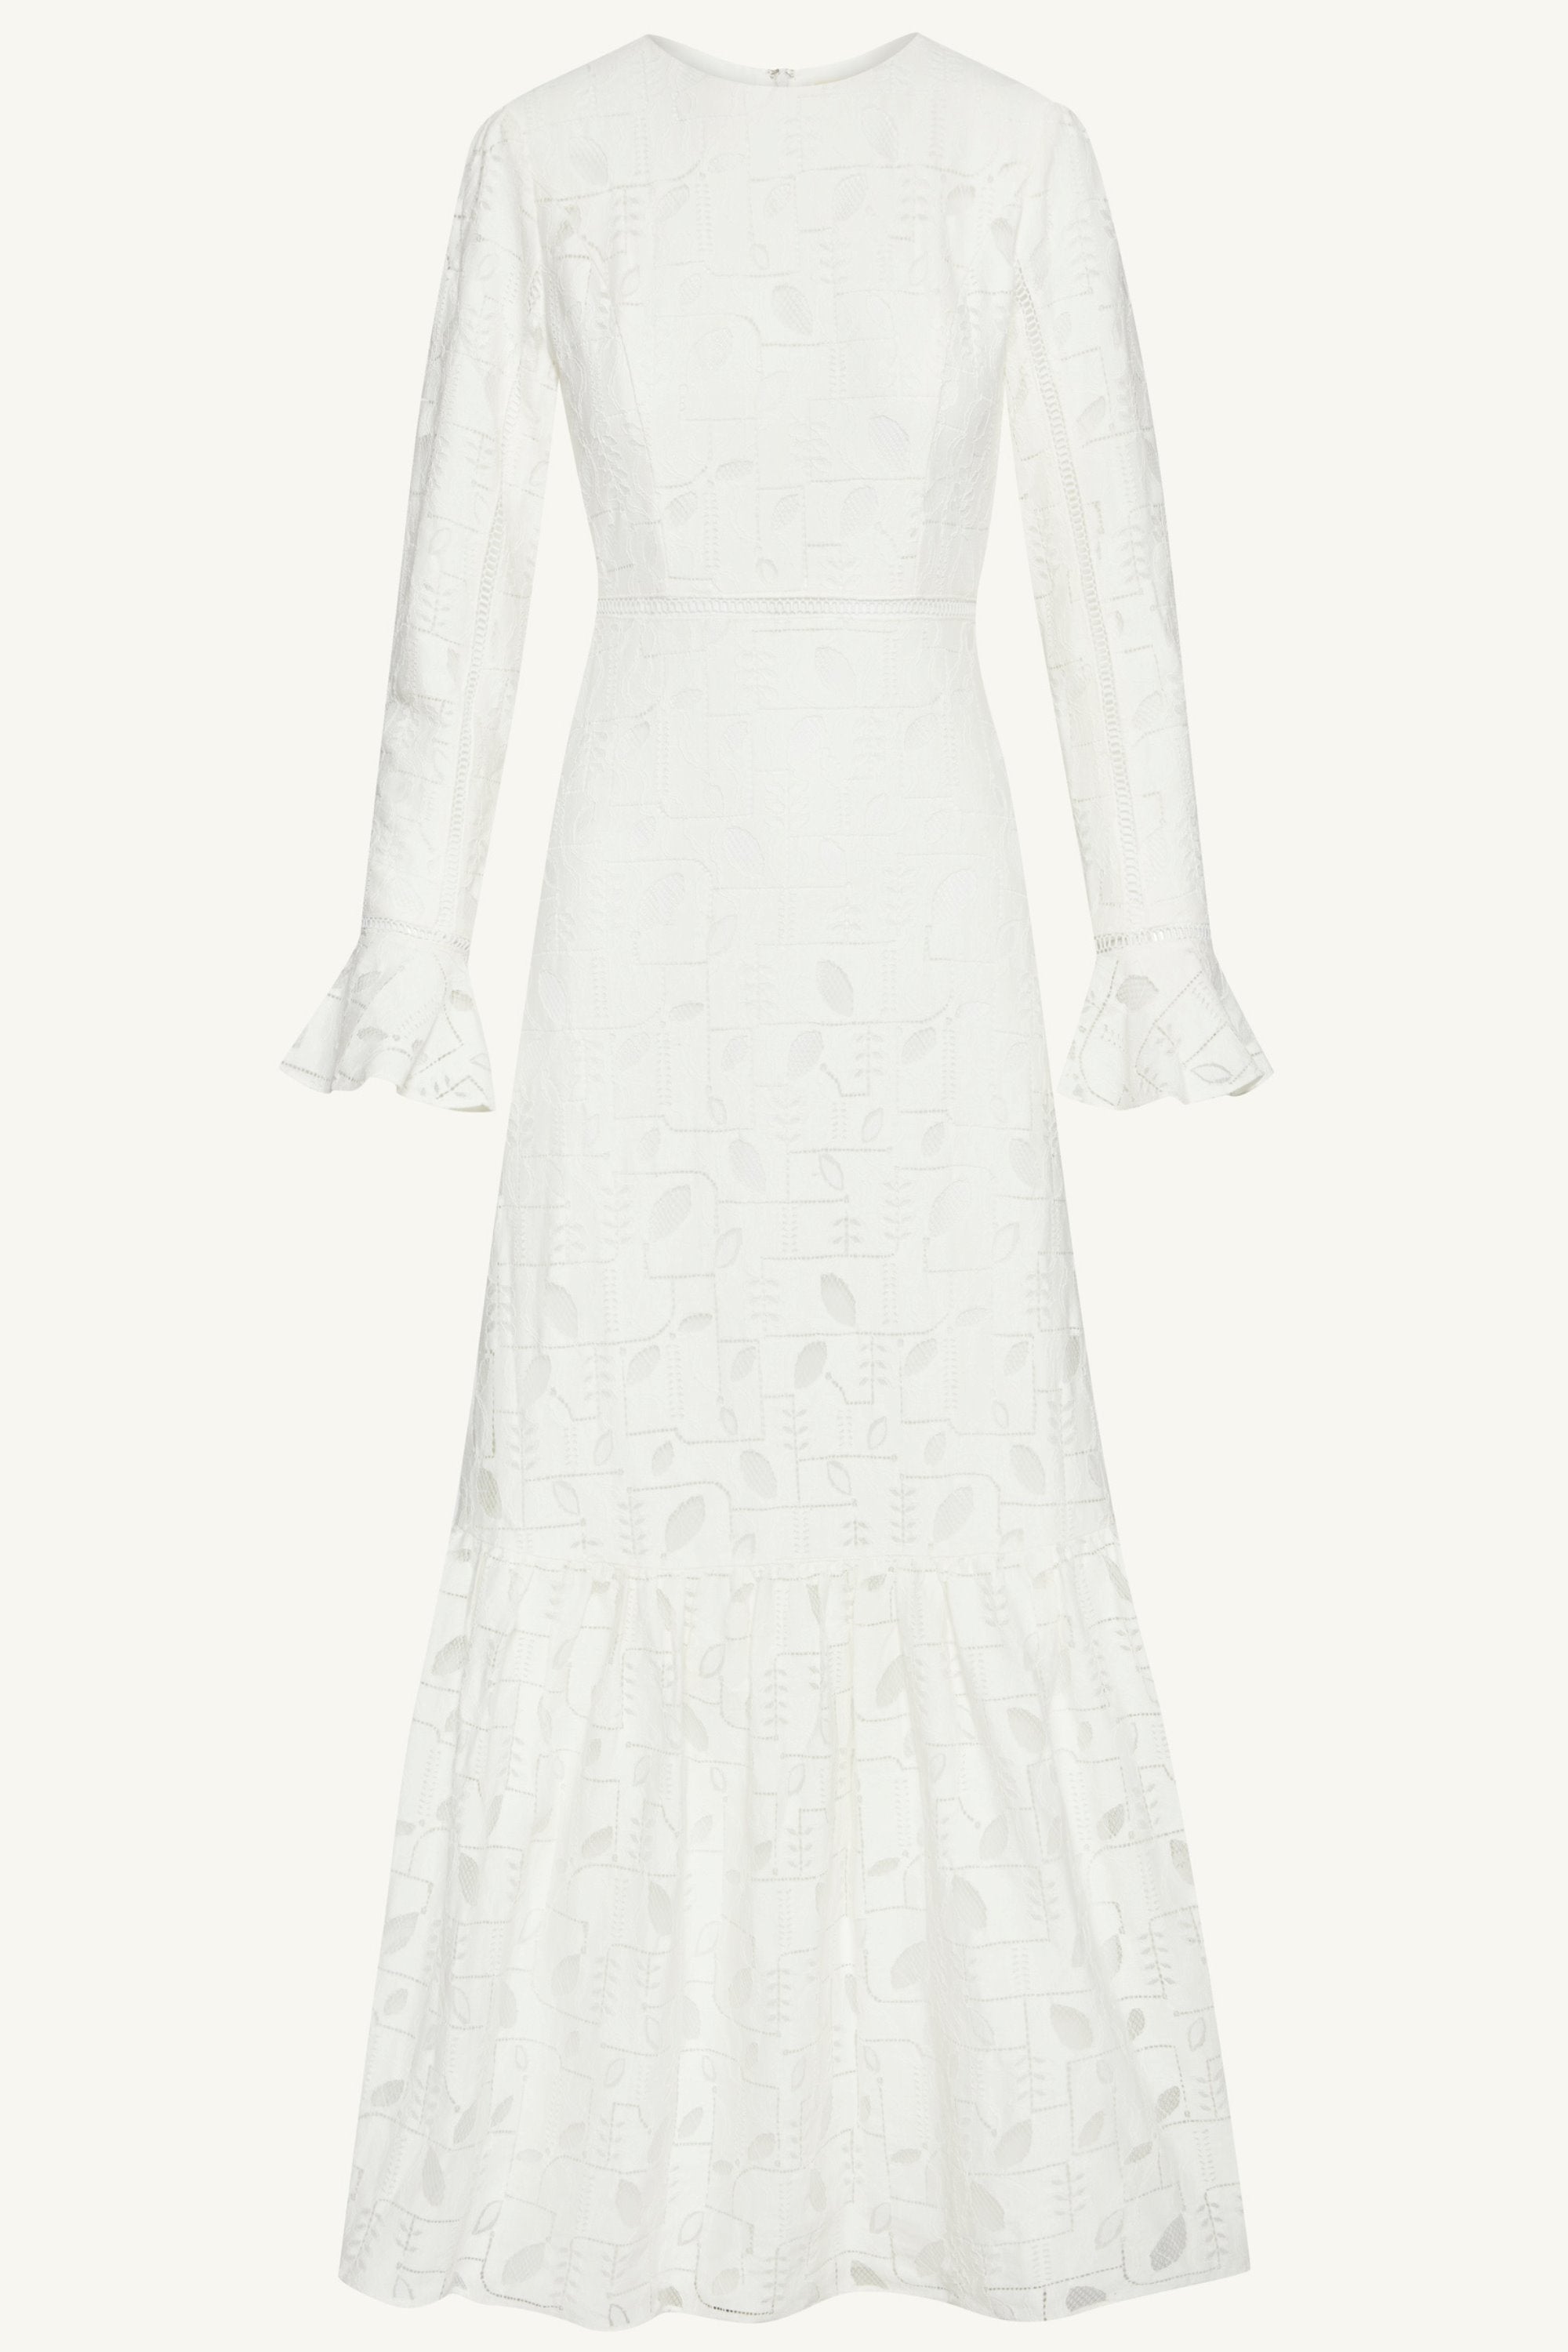 Rayaa White Lace Maxi Dress Clothing Veiled 